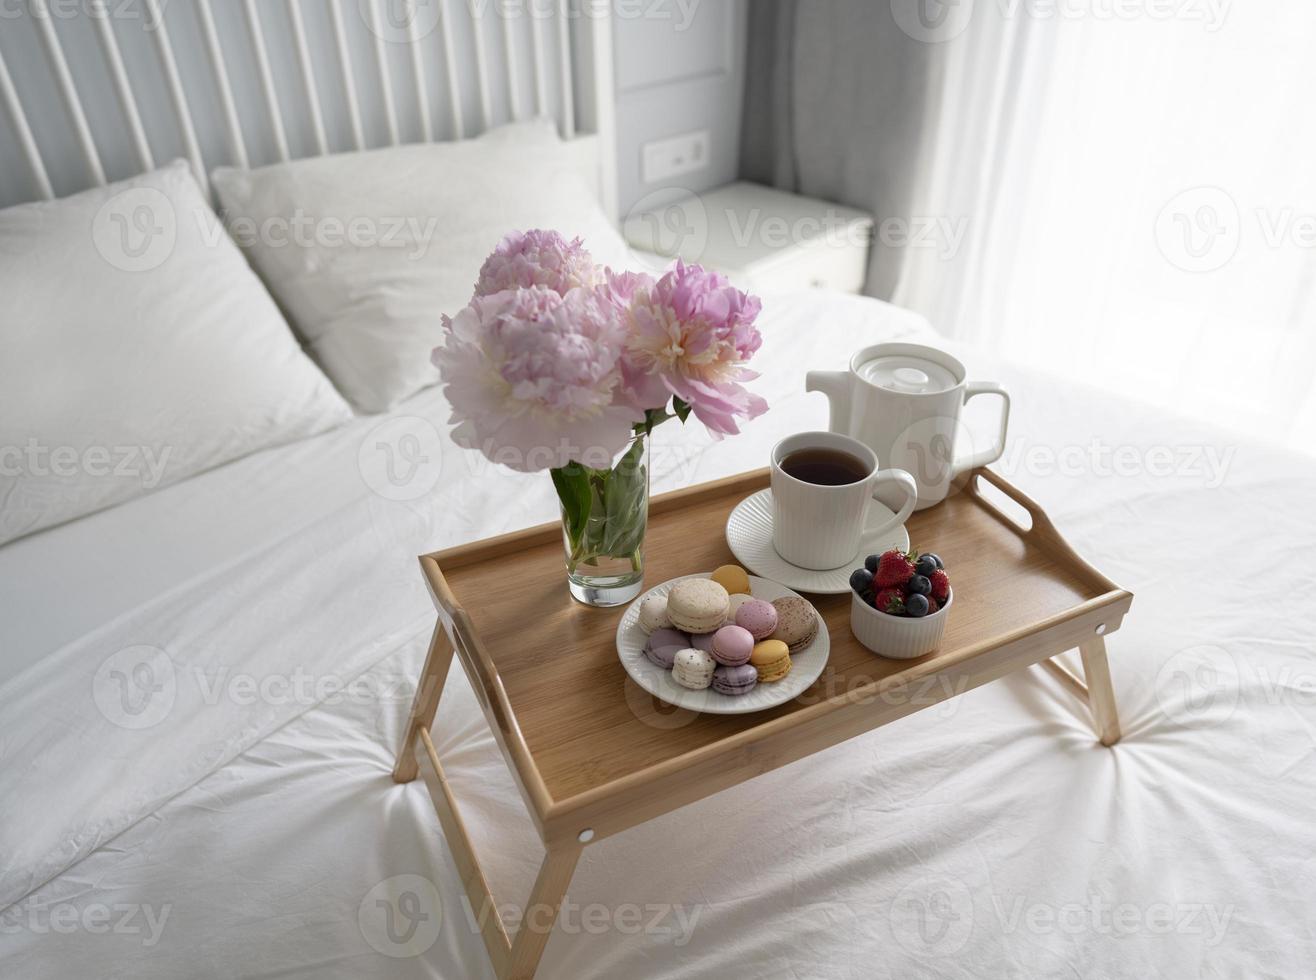 dienblad met ontbijt op bed. foto